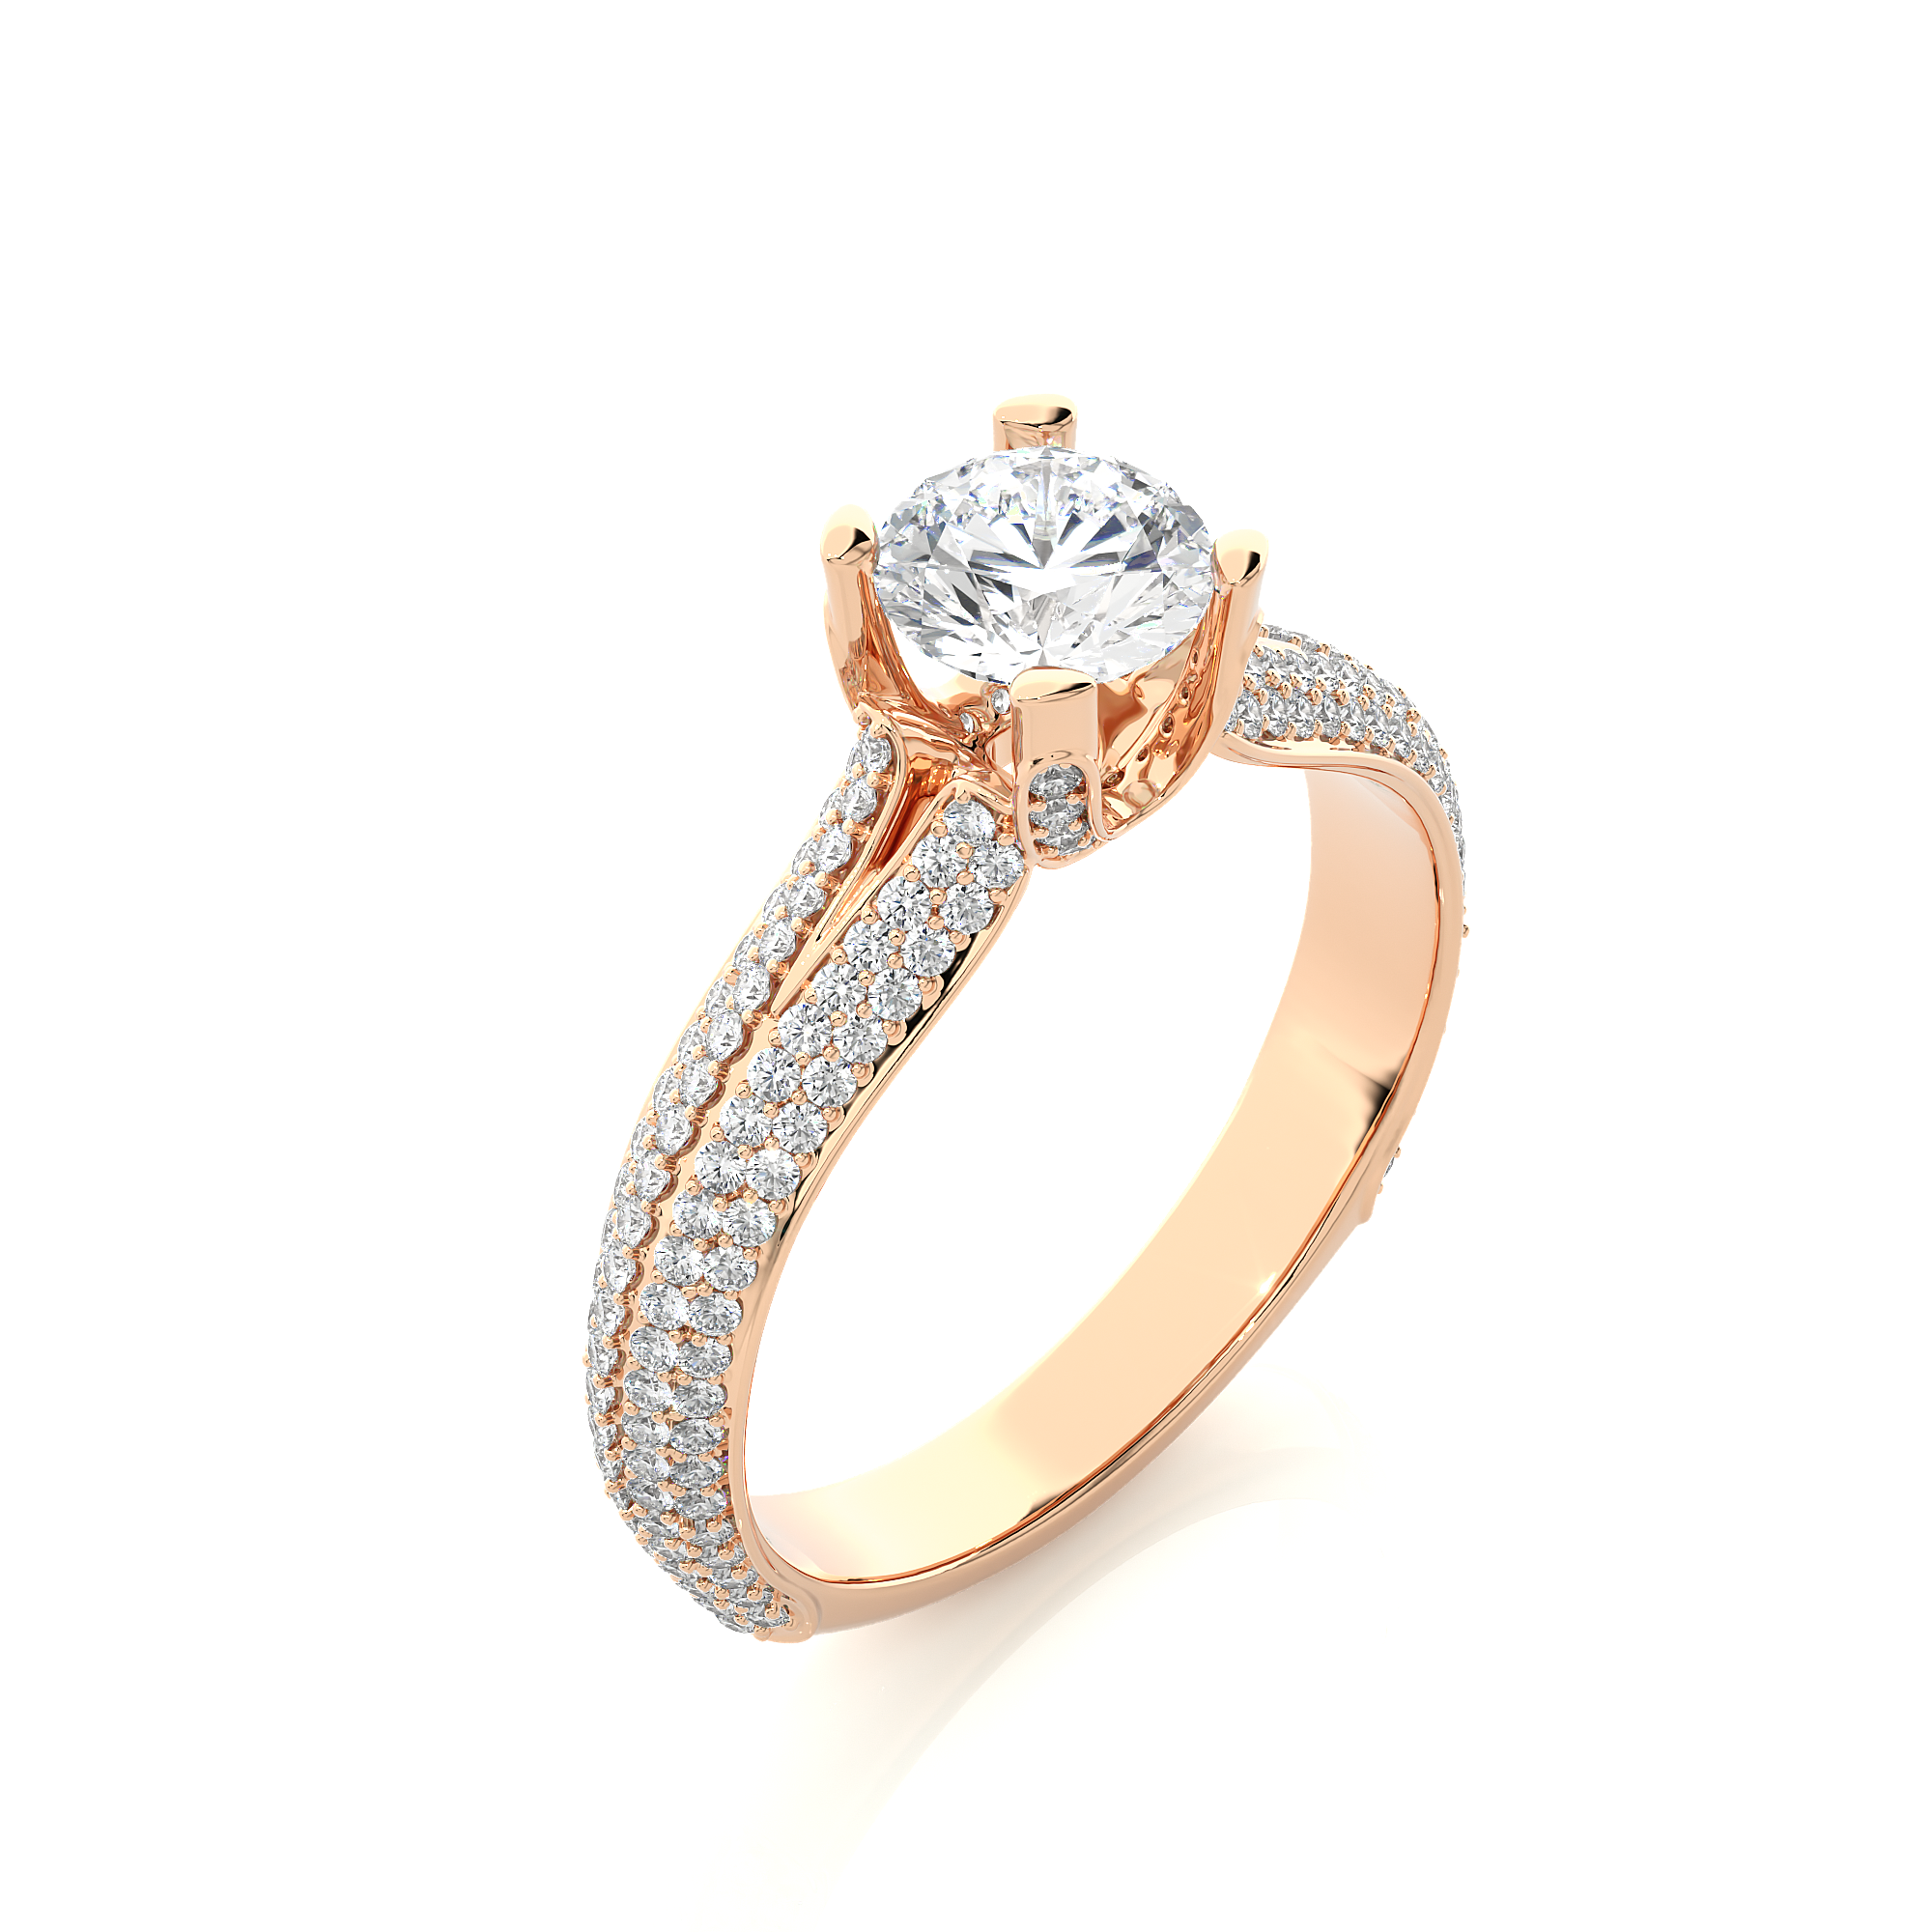 Elanor Ring - Solitaire Diamond Ring